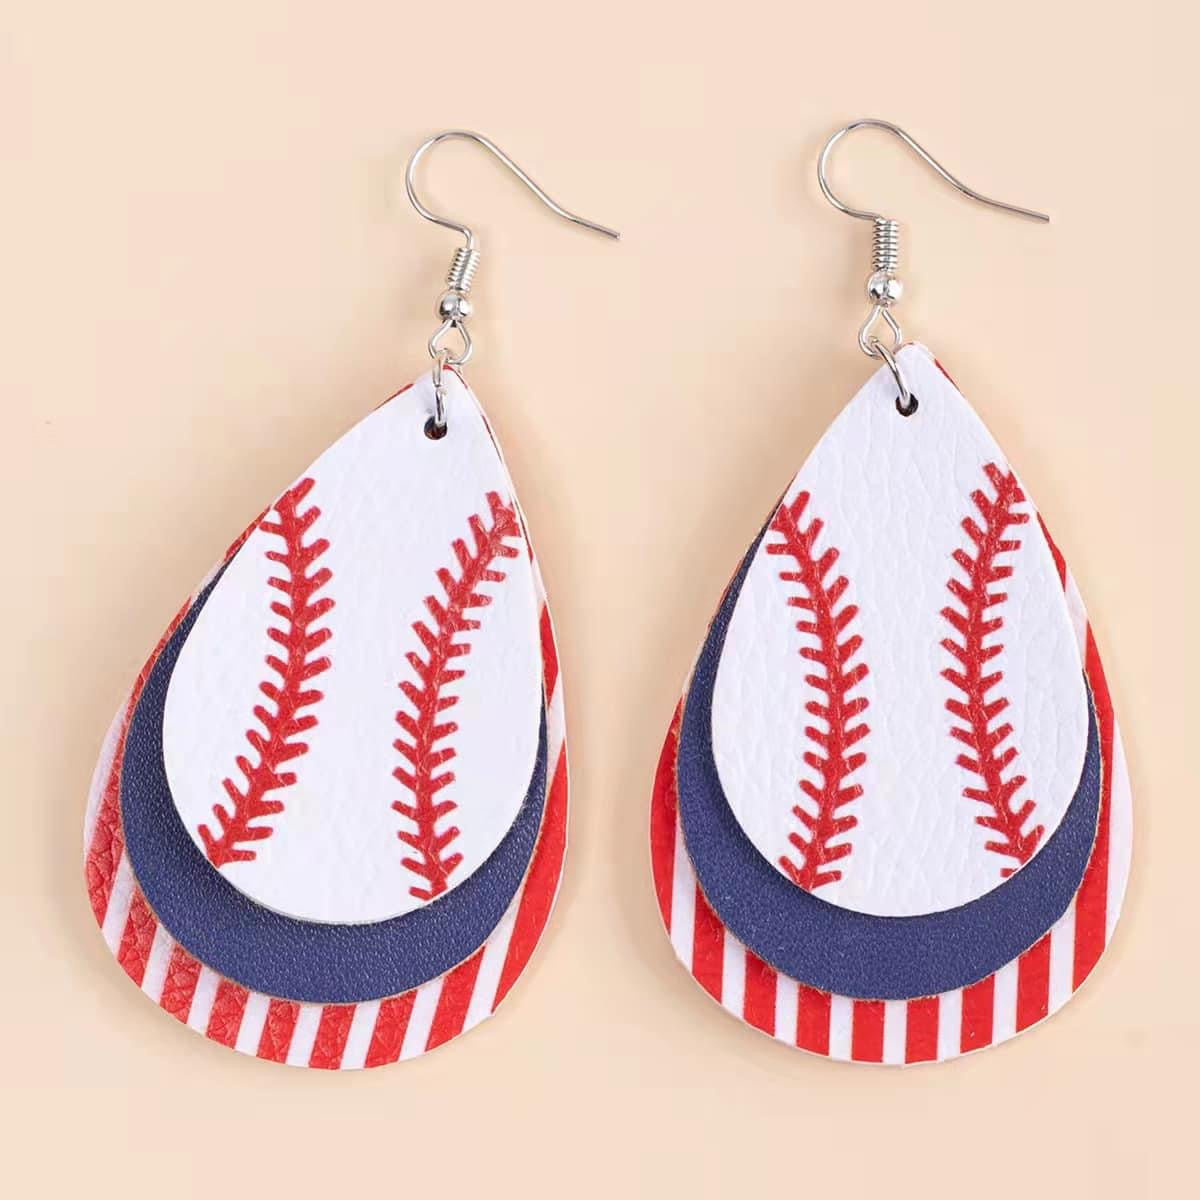 RTS PU Leather Teardrop Baseball / Softball Fashion Earrings